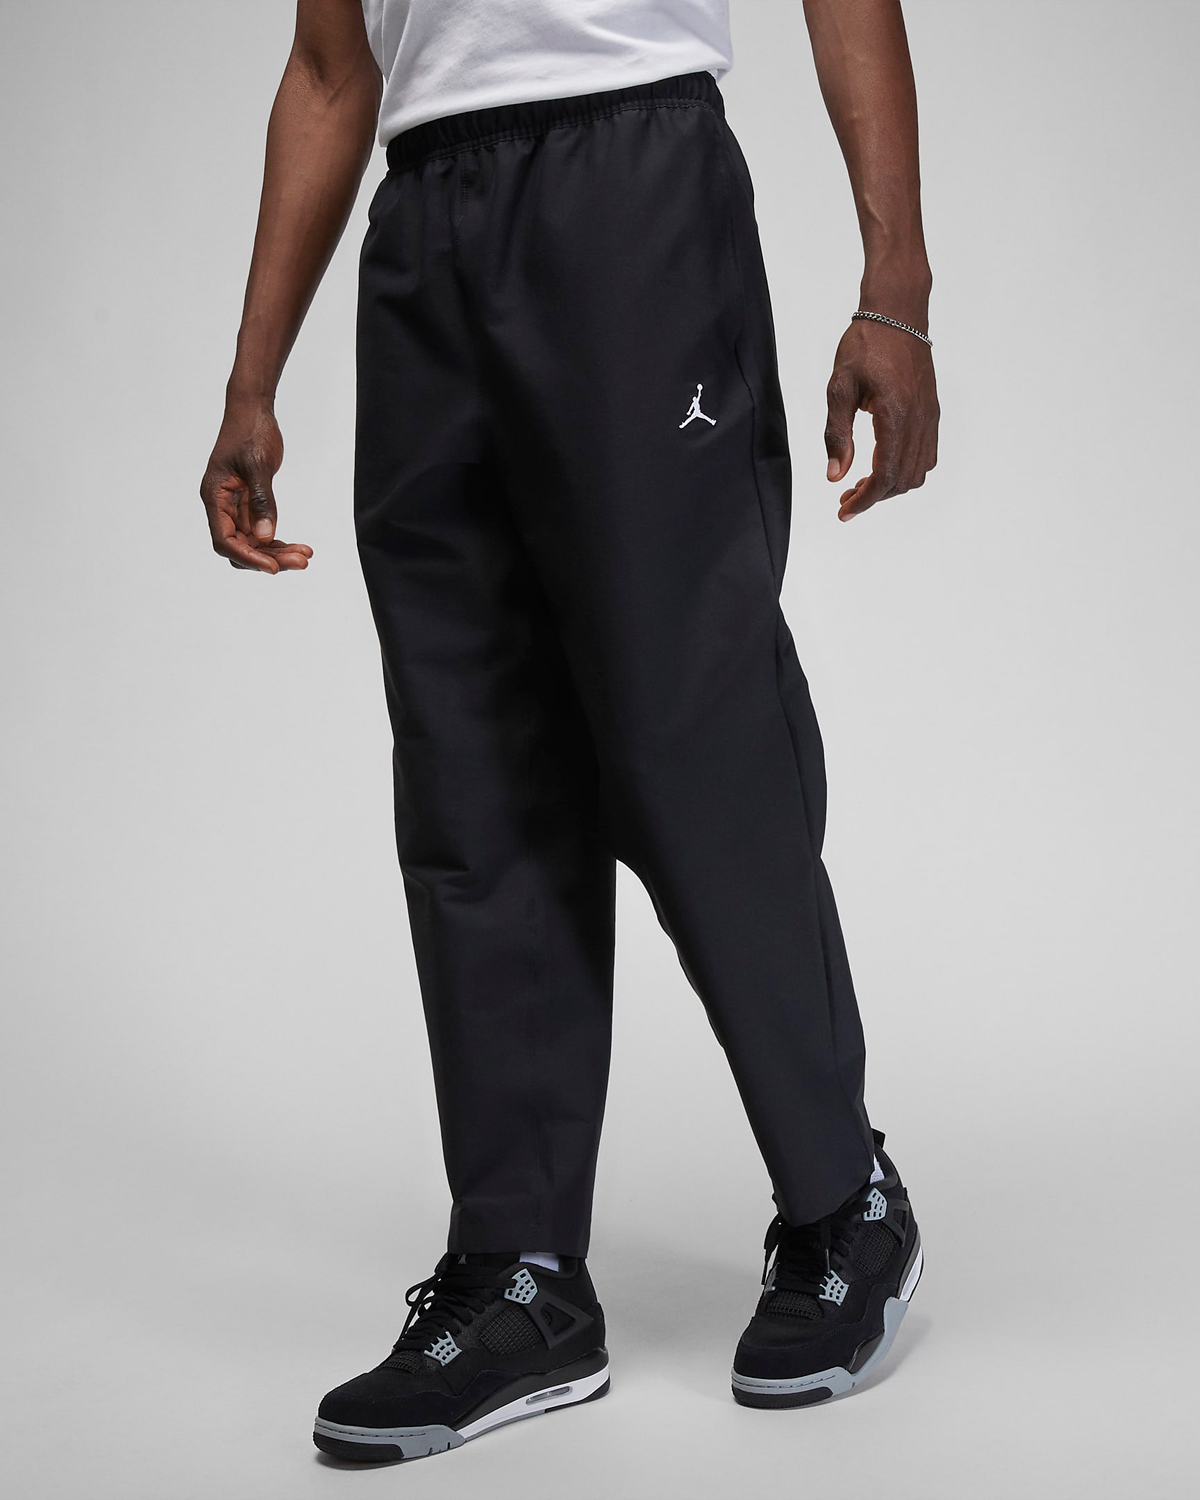 Jordan-Essentials-Cropped-Pants-Black-White